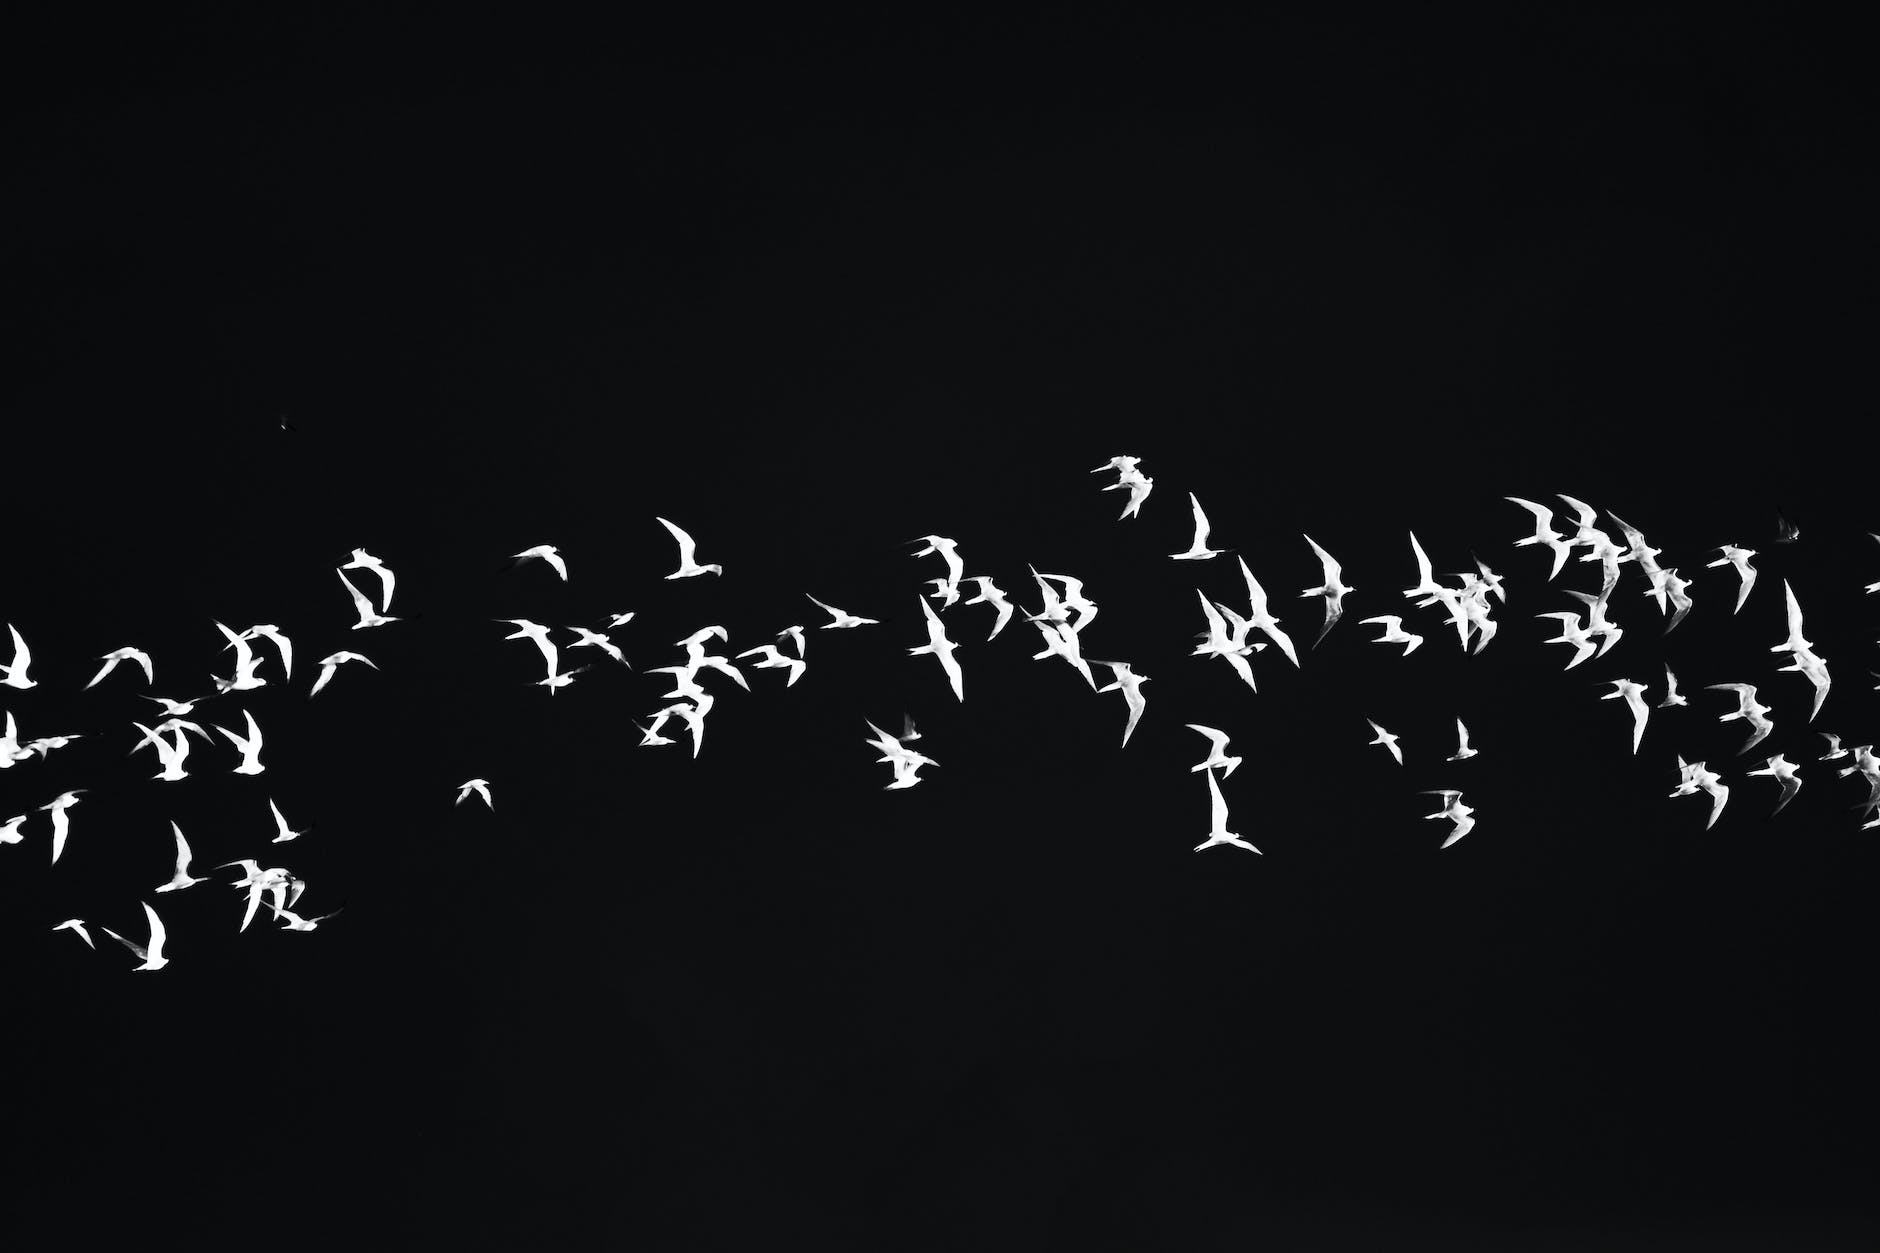 flock of white birds against a black background